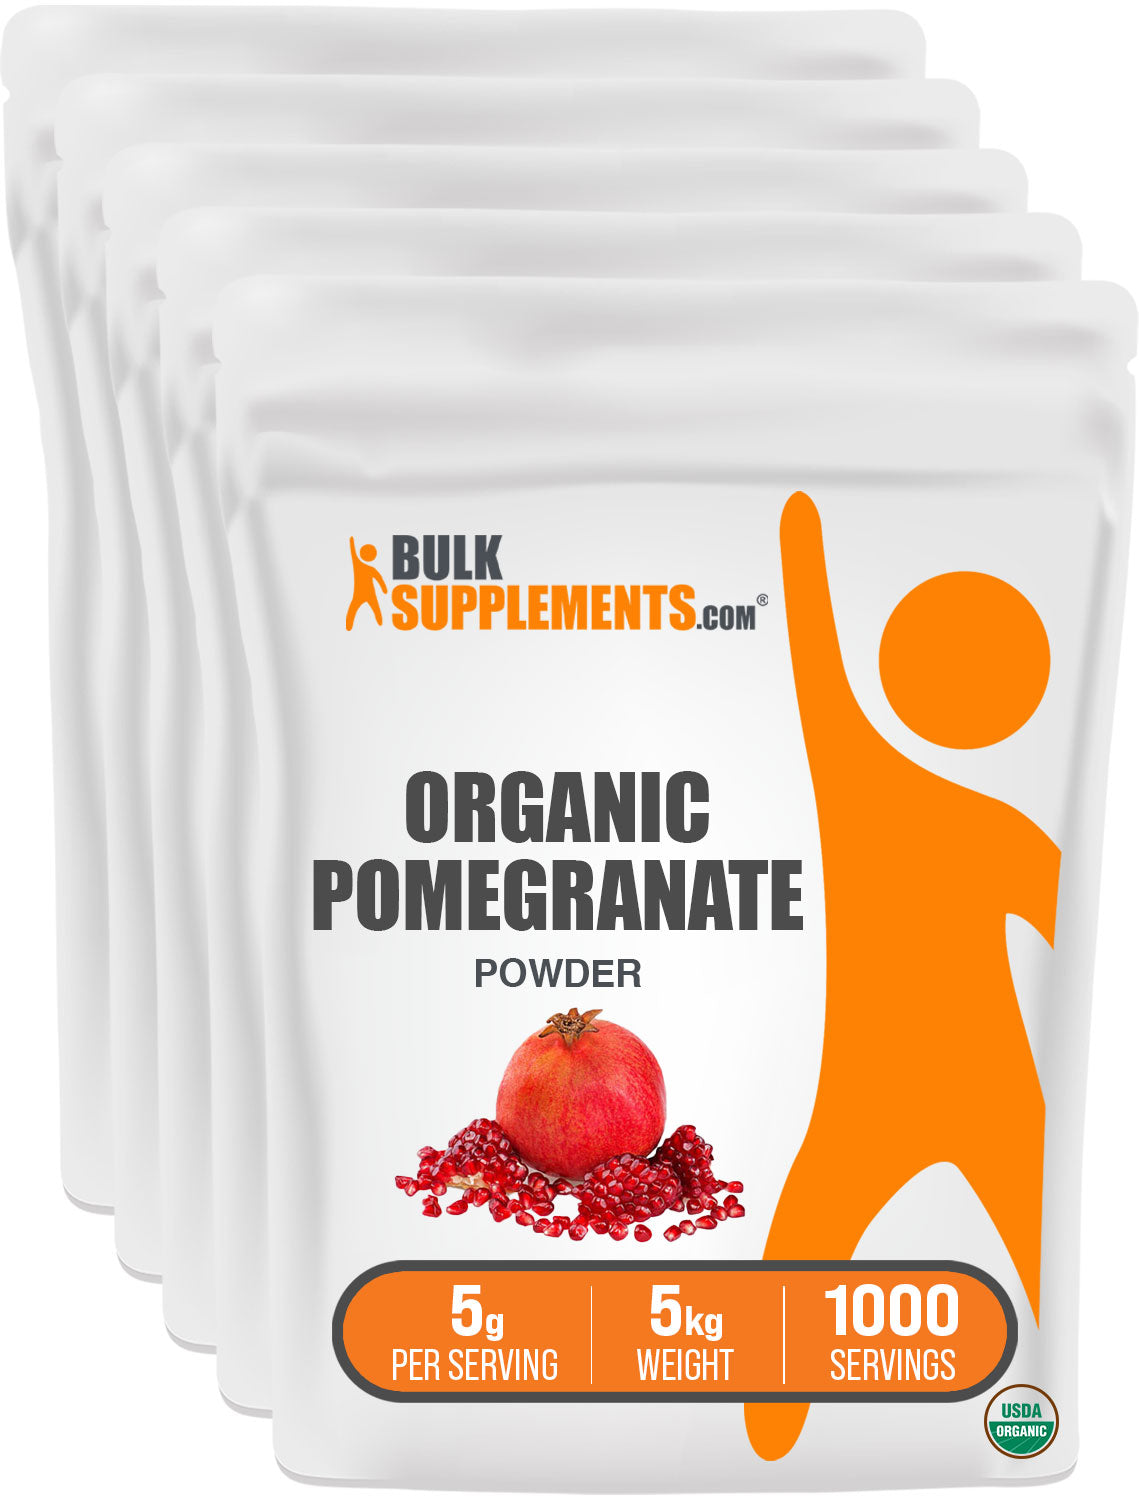 BulkSupplements.com Organic Pomegranate Powder 5KG Bag